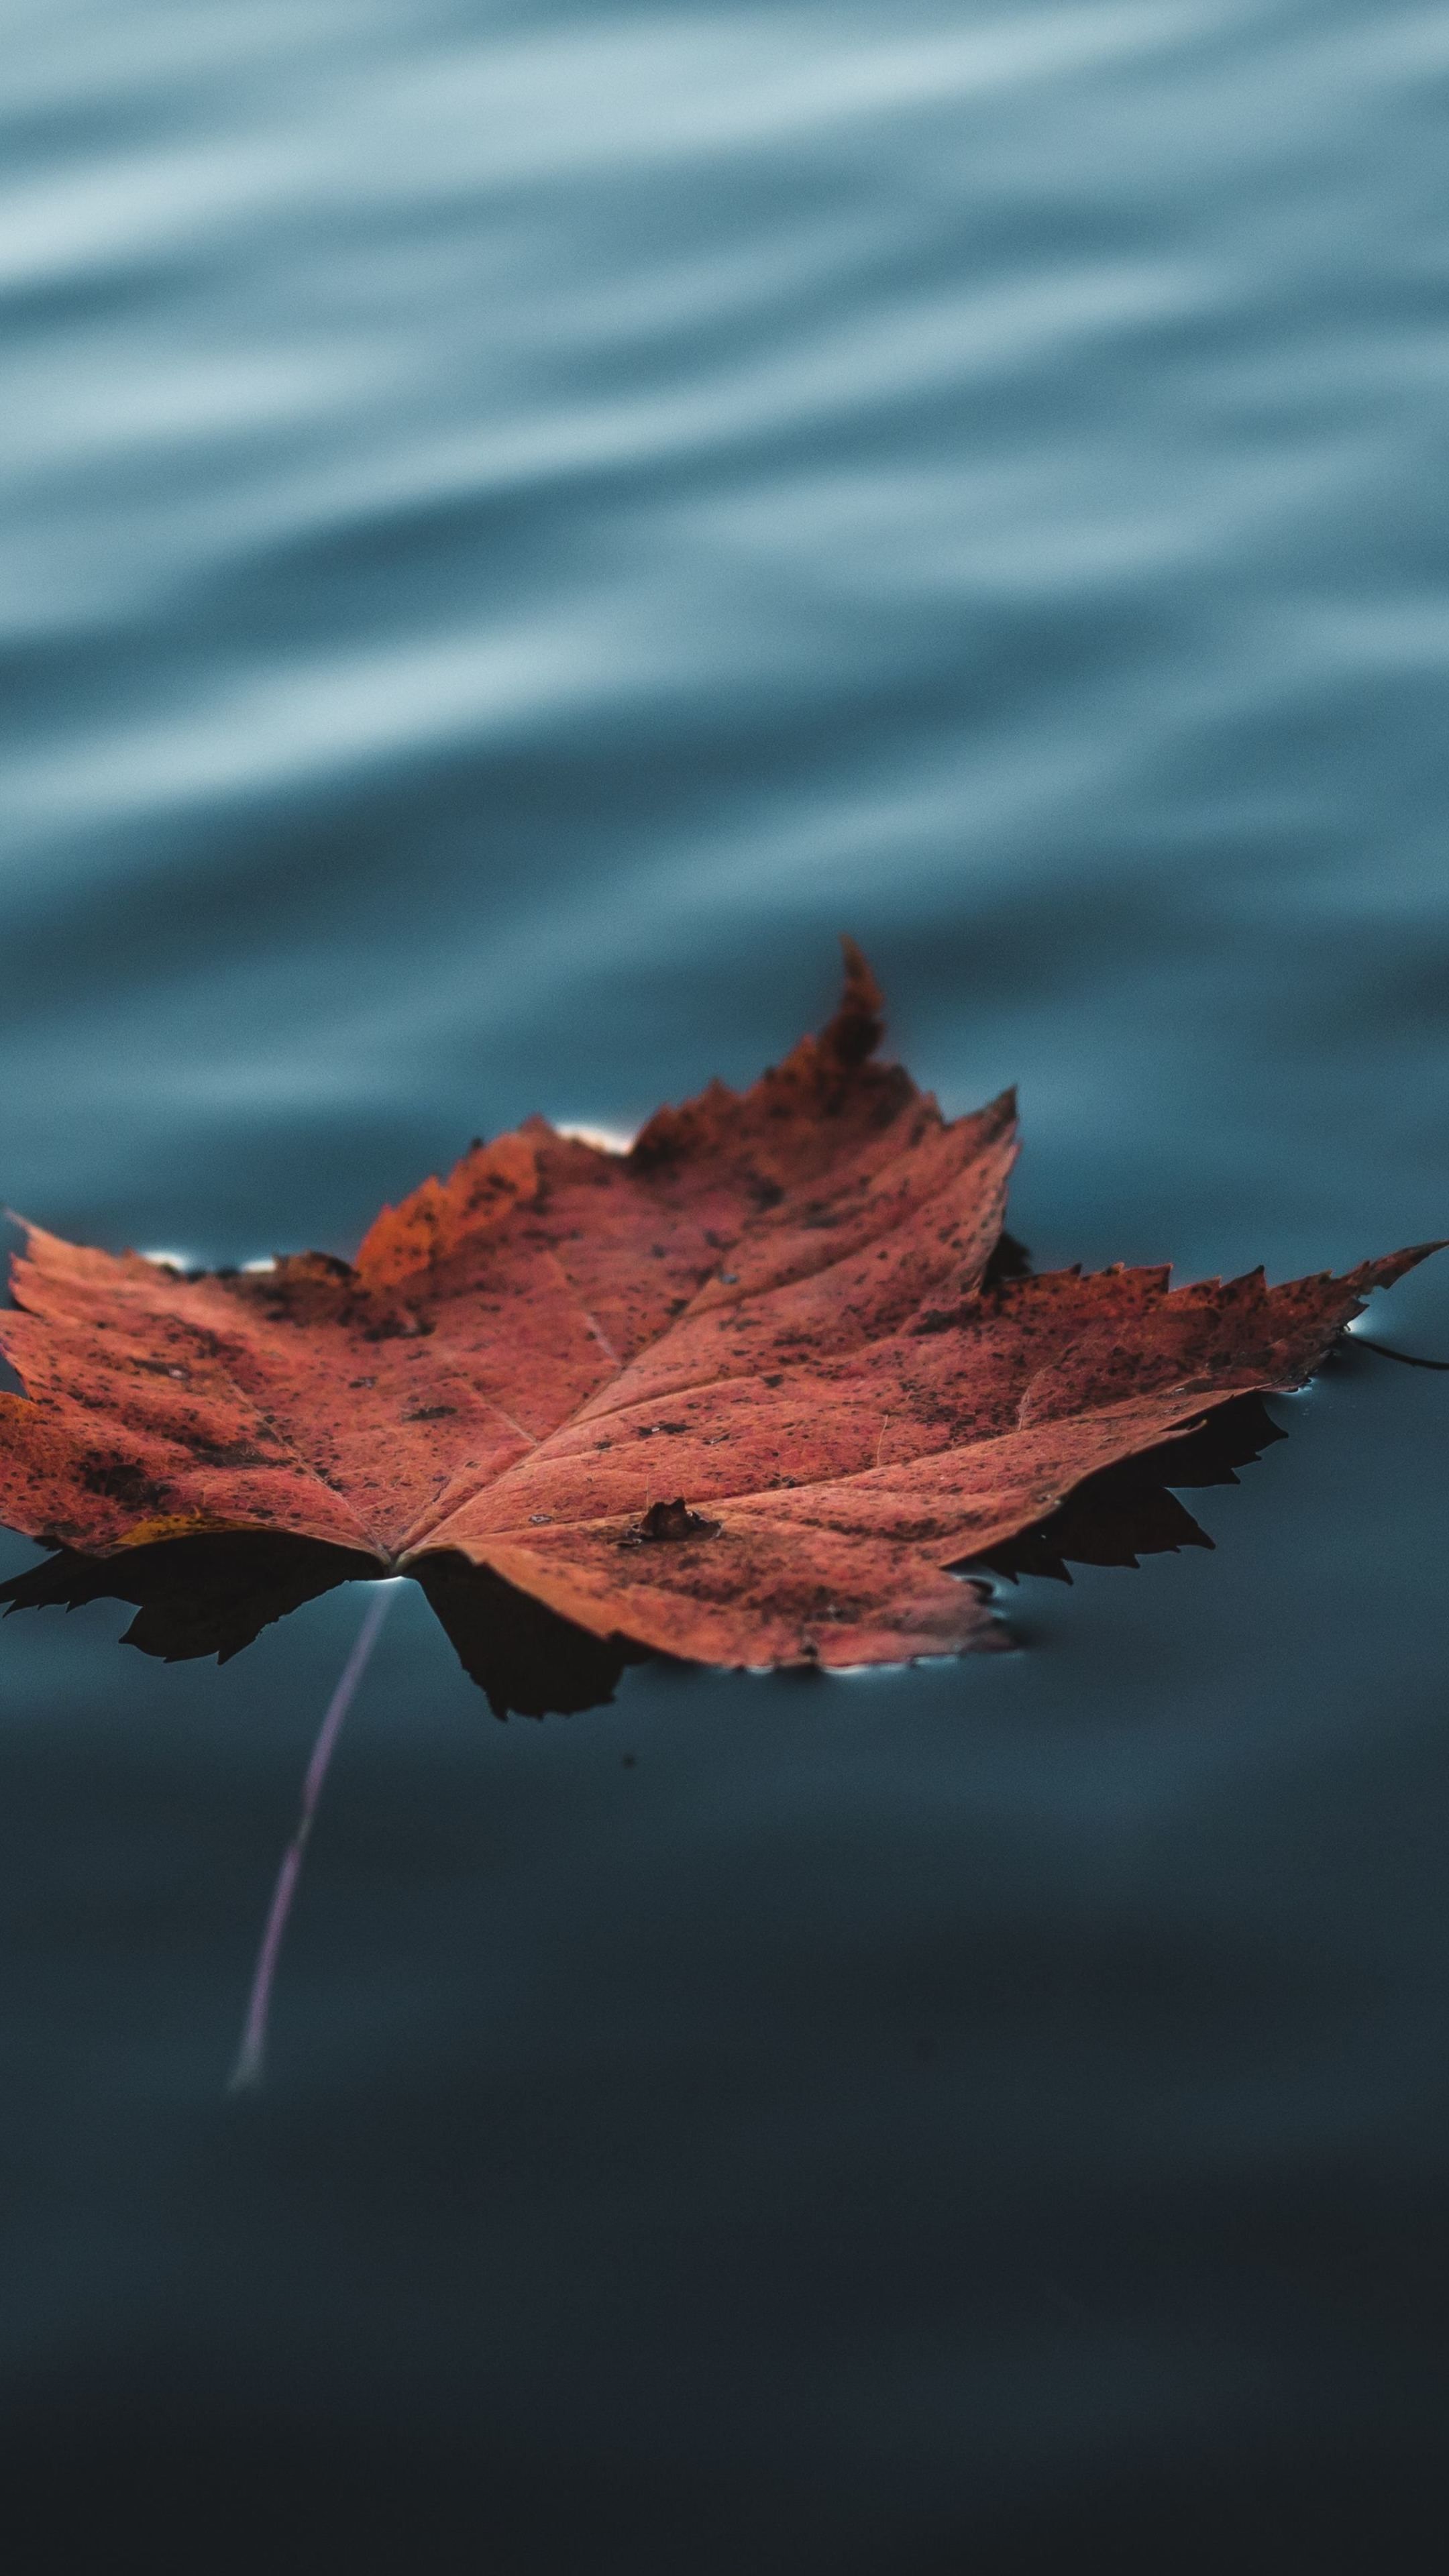 Nature #Orange Autumn Leaf Floating On Water #wallpaper. Fotos de paisagem, Desenho tutorial corpo, Fotos